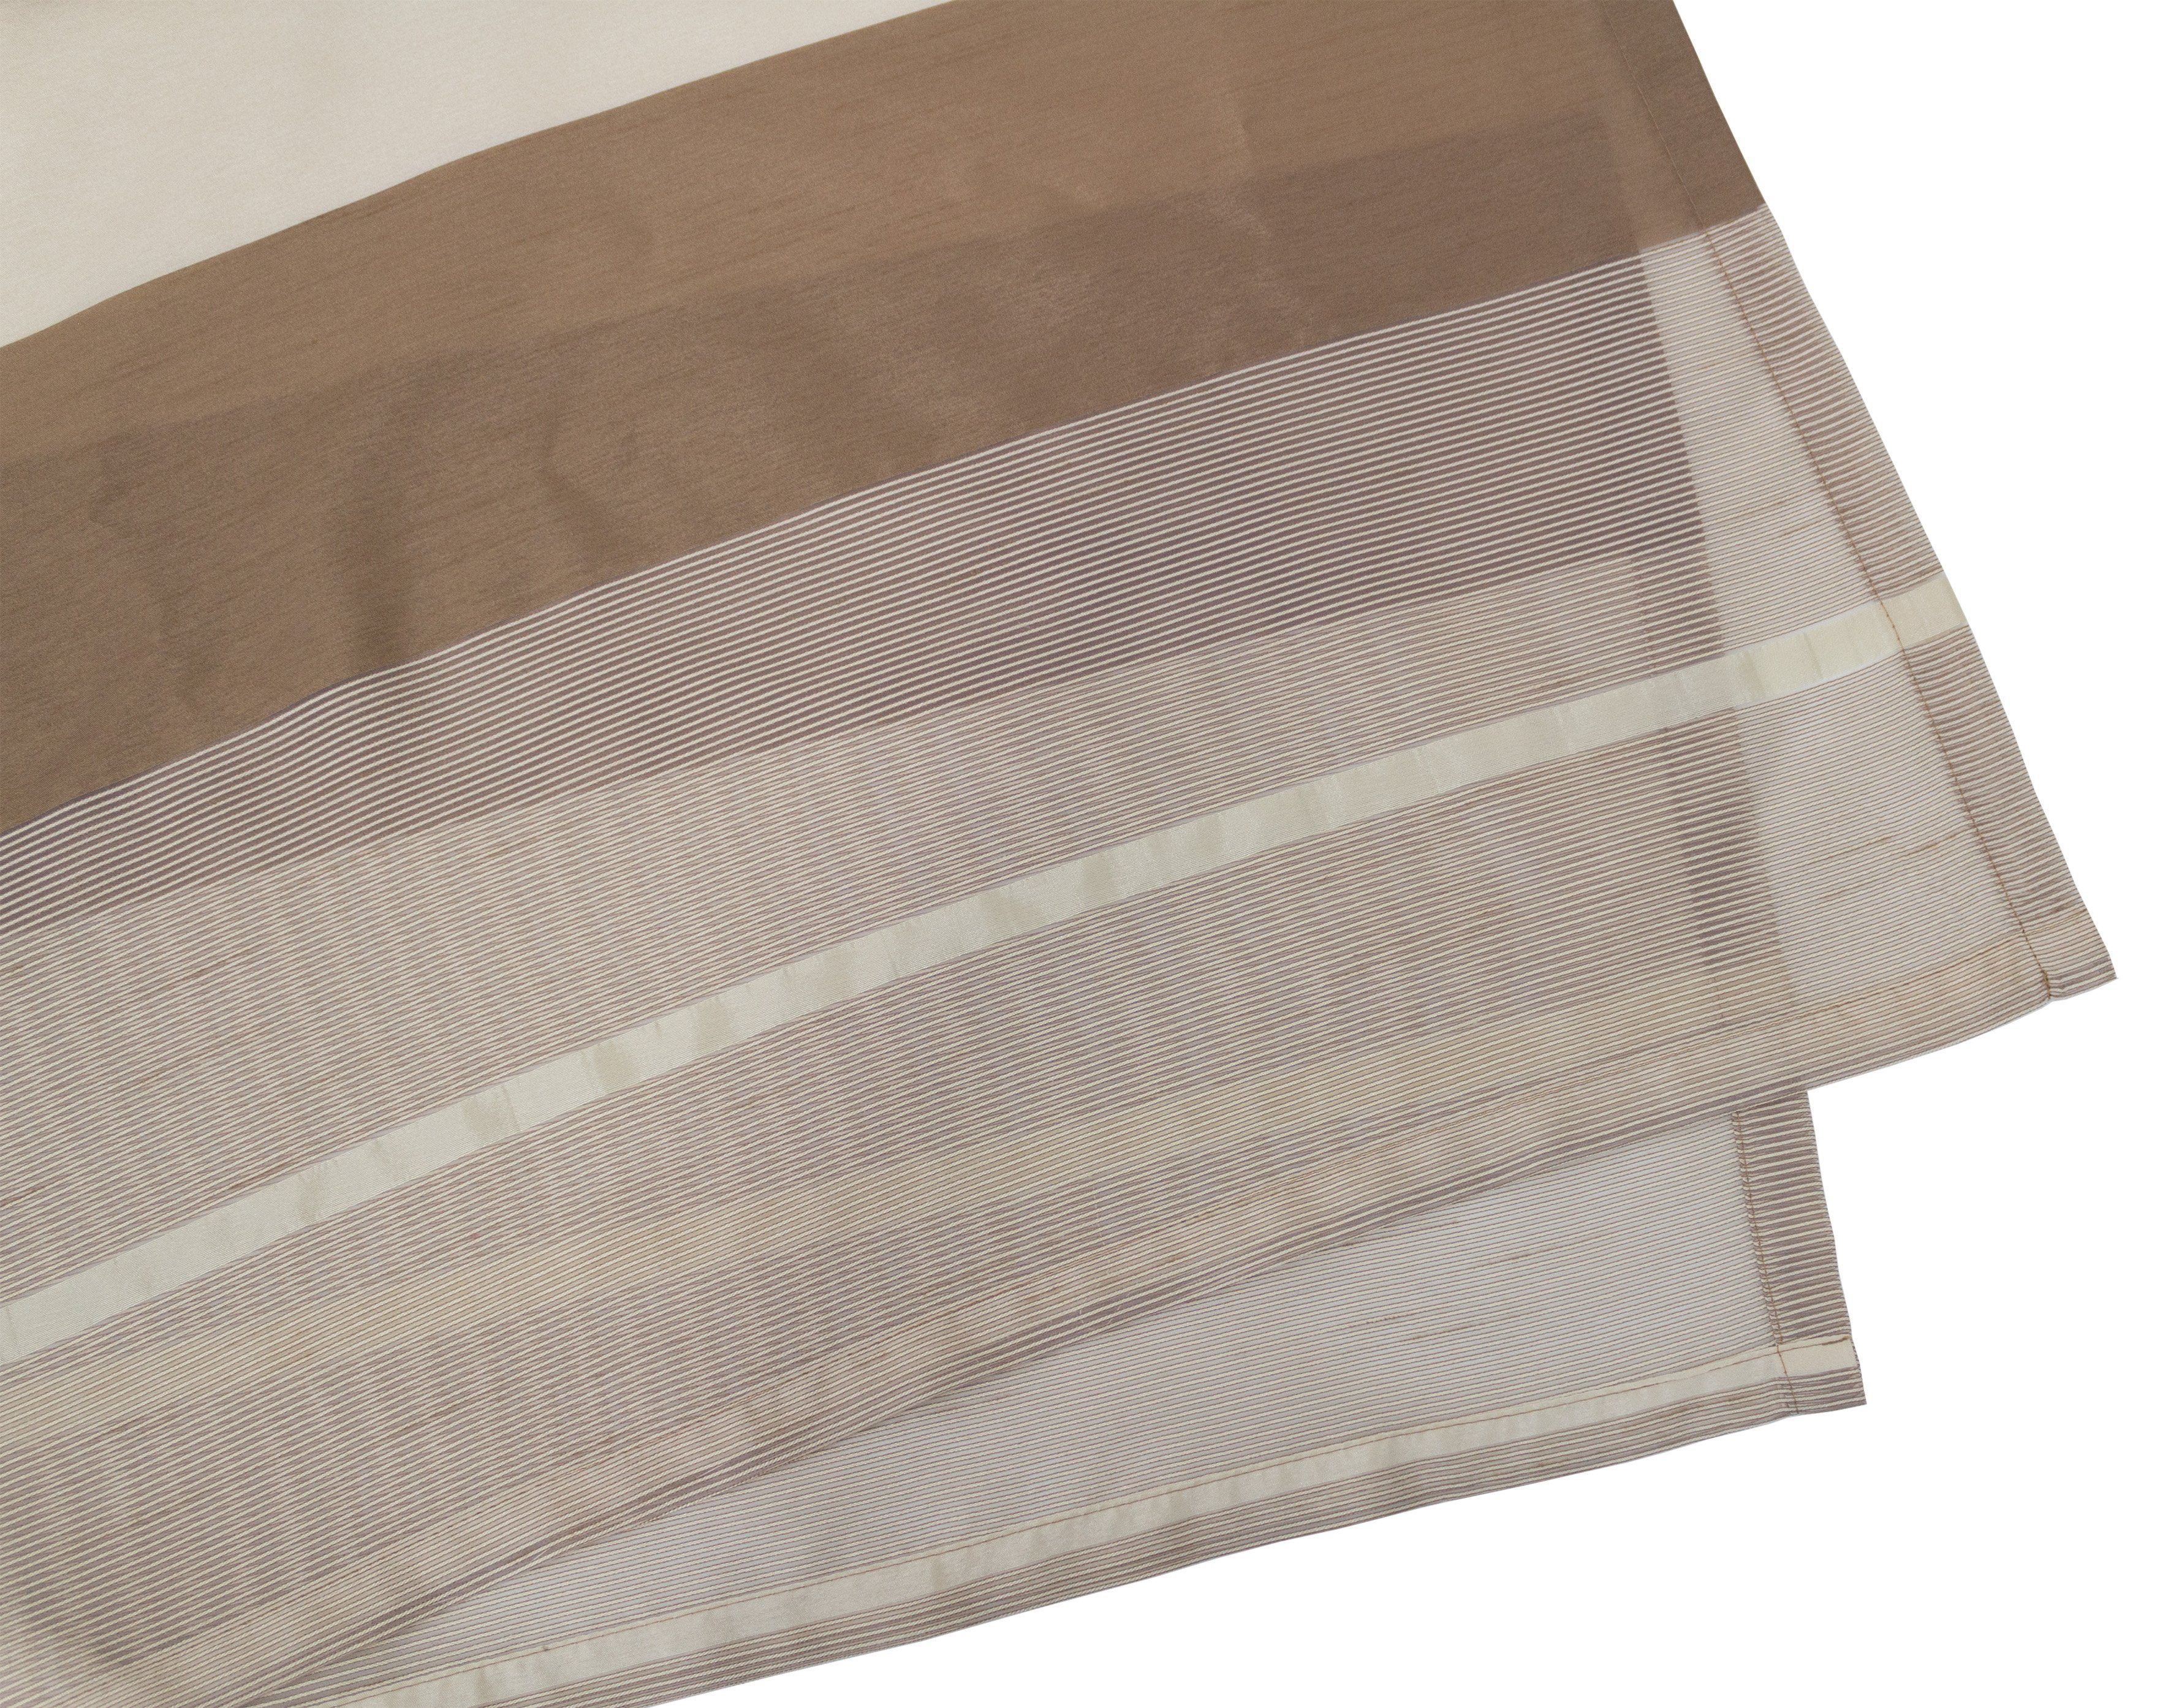 St), Schal halbtransparent, Kräuselband Polyester, beige-braun Vorhang Solea, VHG, (1